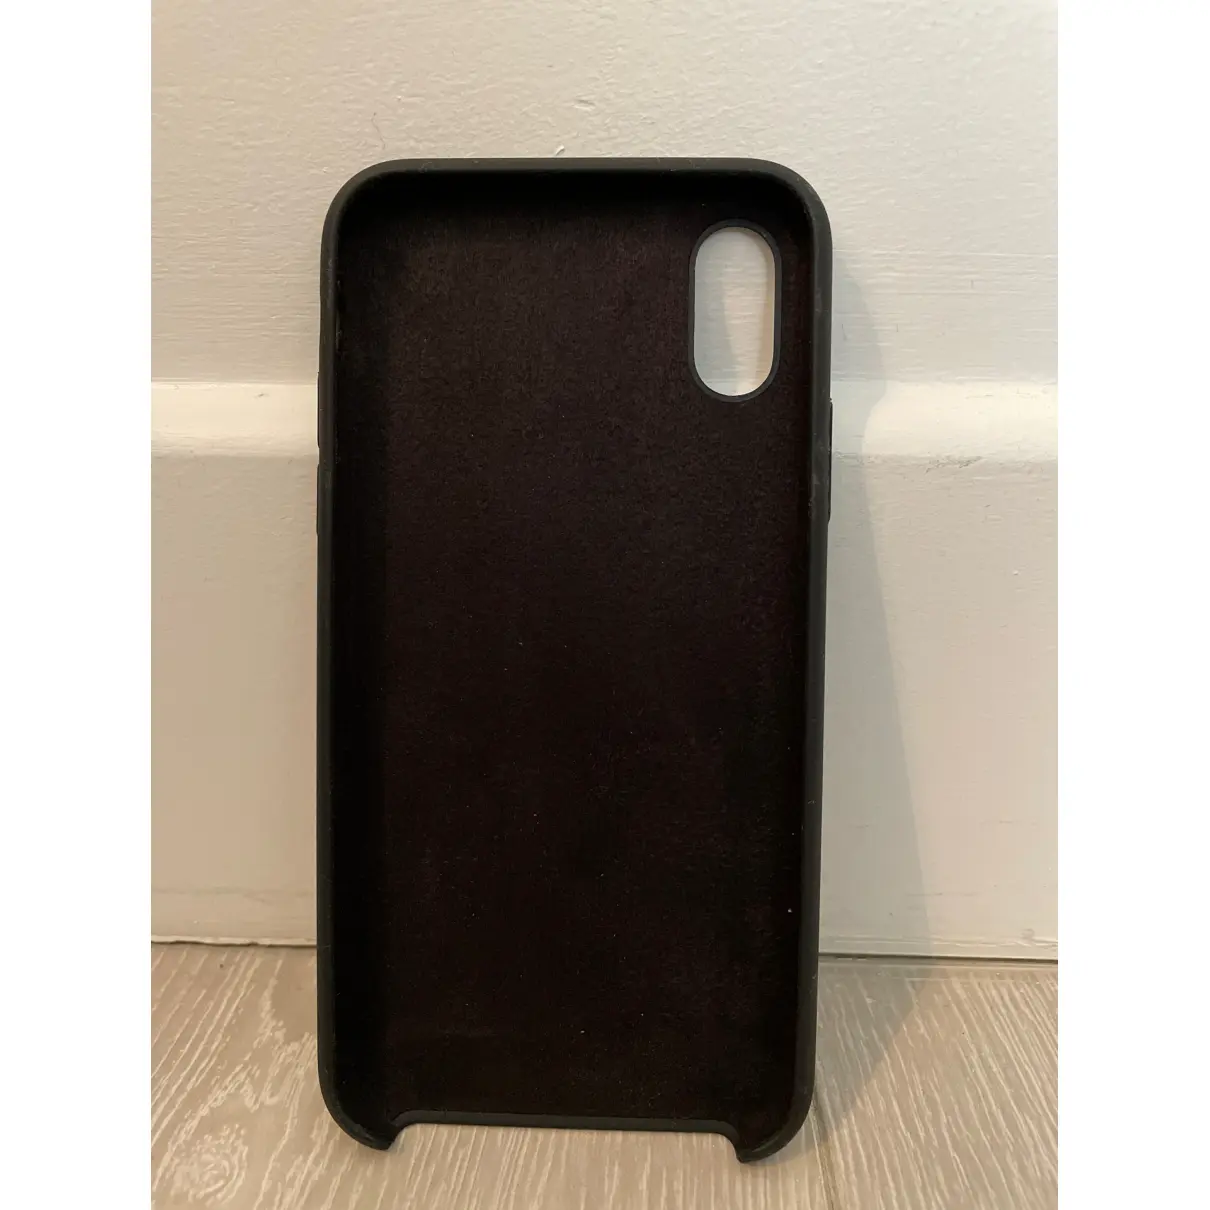 Buy Saint Laurent Iphone case online